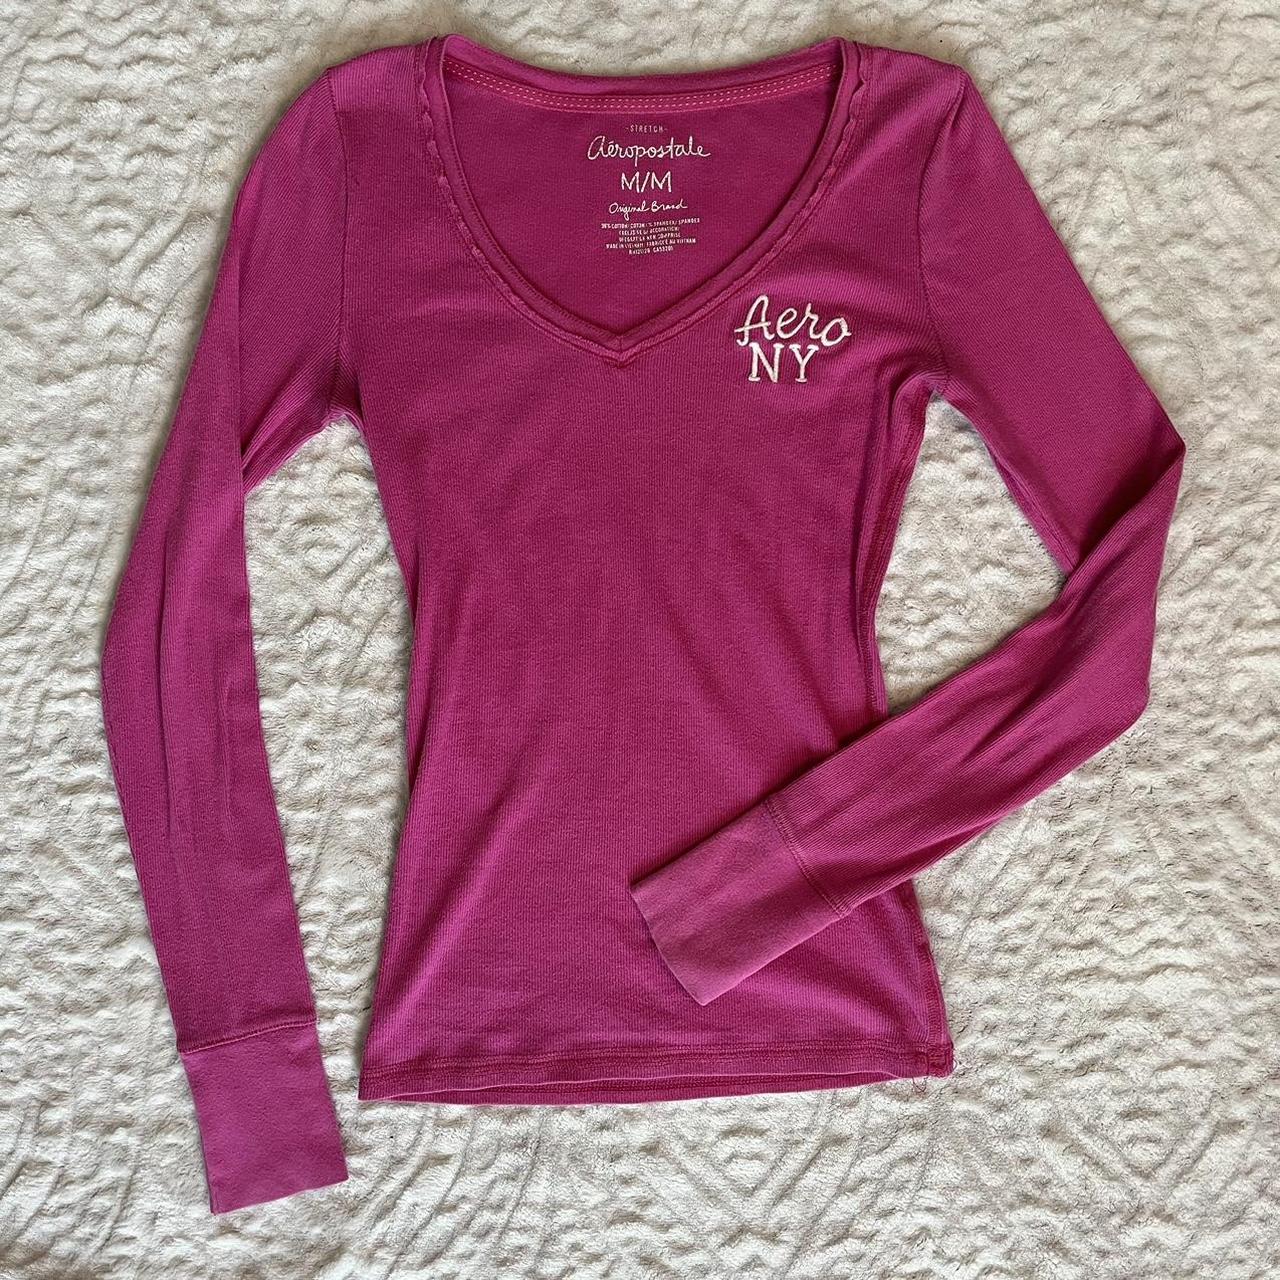 Aeropostale Women's Pink Shirt | Depop